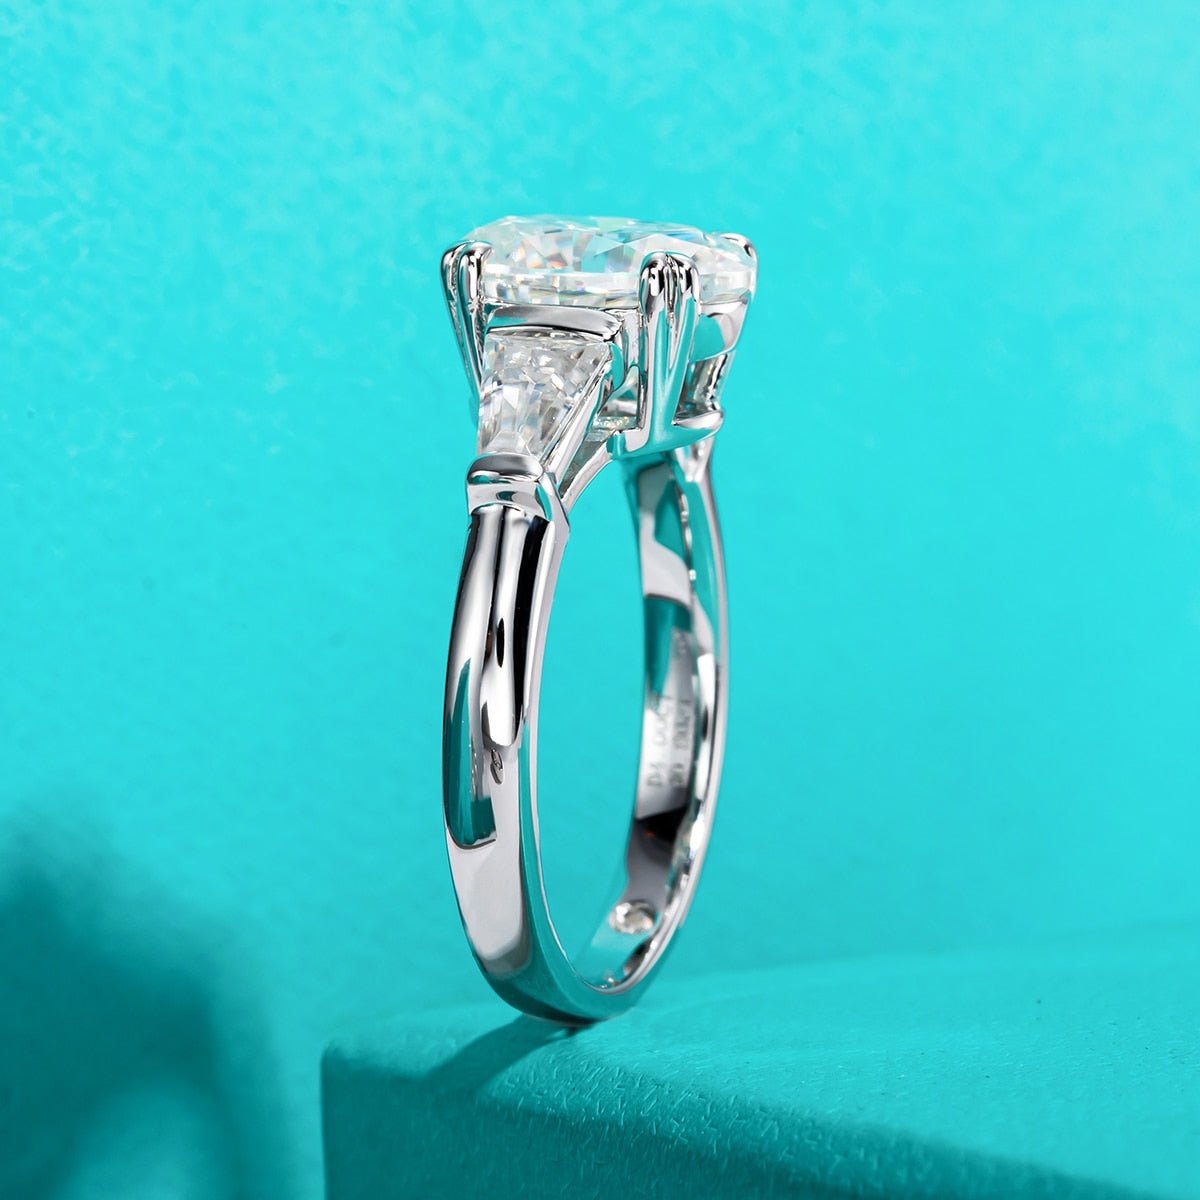 3.8 ct Oval Cut Diamond Engagement-Black Diamonds New York